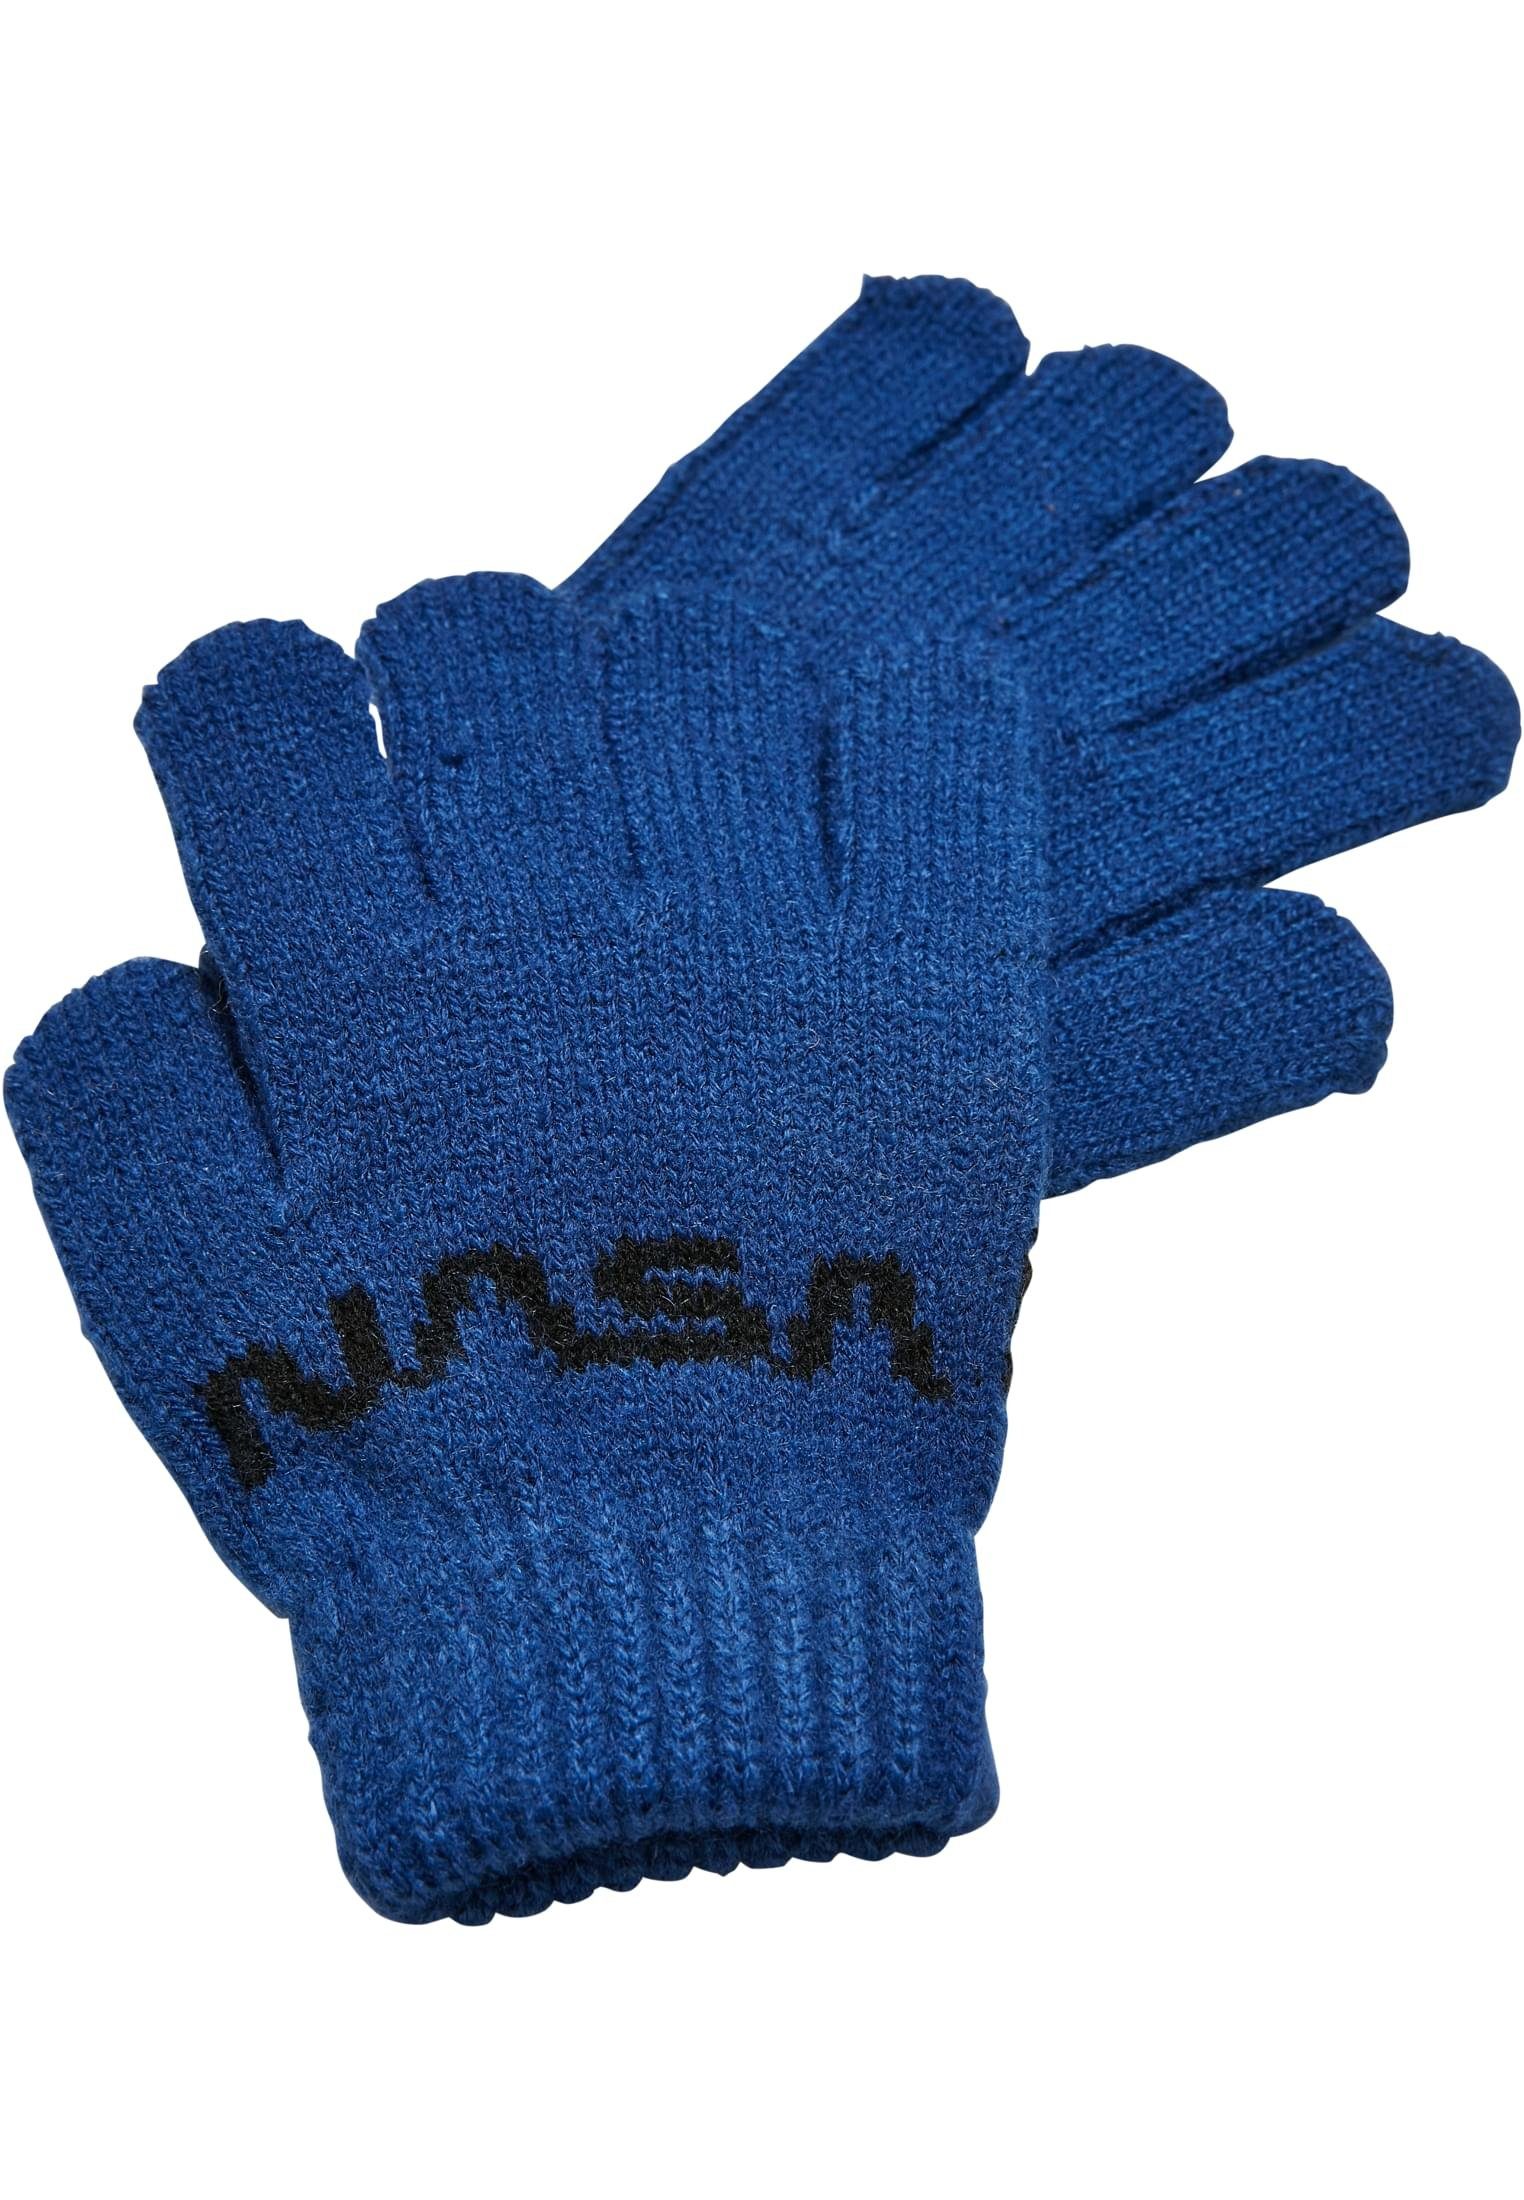 Mister NASA Knit Accessoires Tee Baumwollhandschuhe MisterTee Kids Glove royal